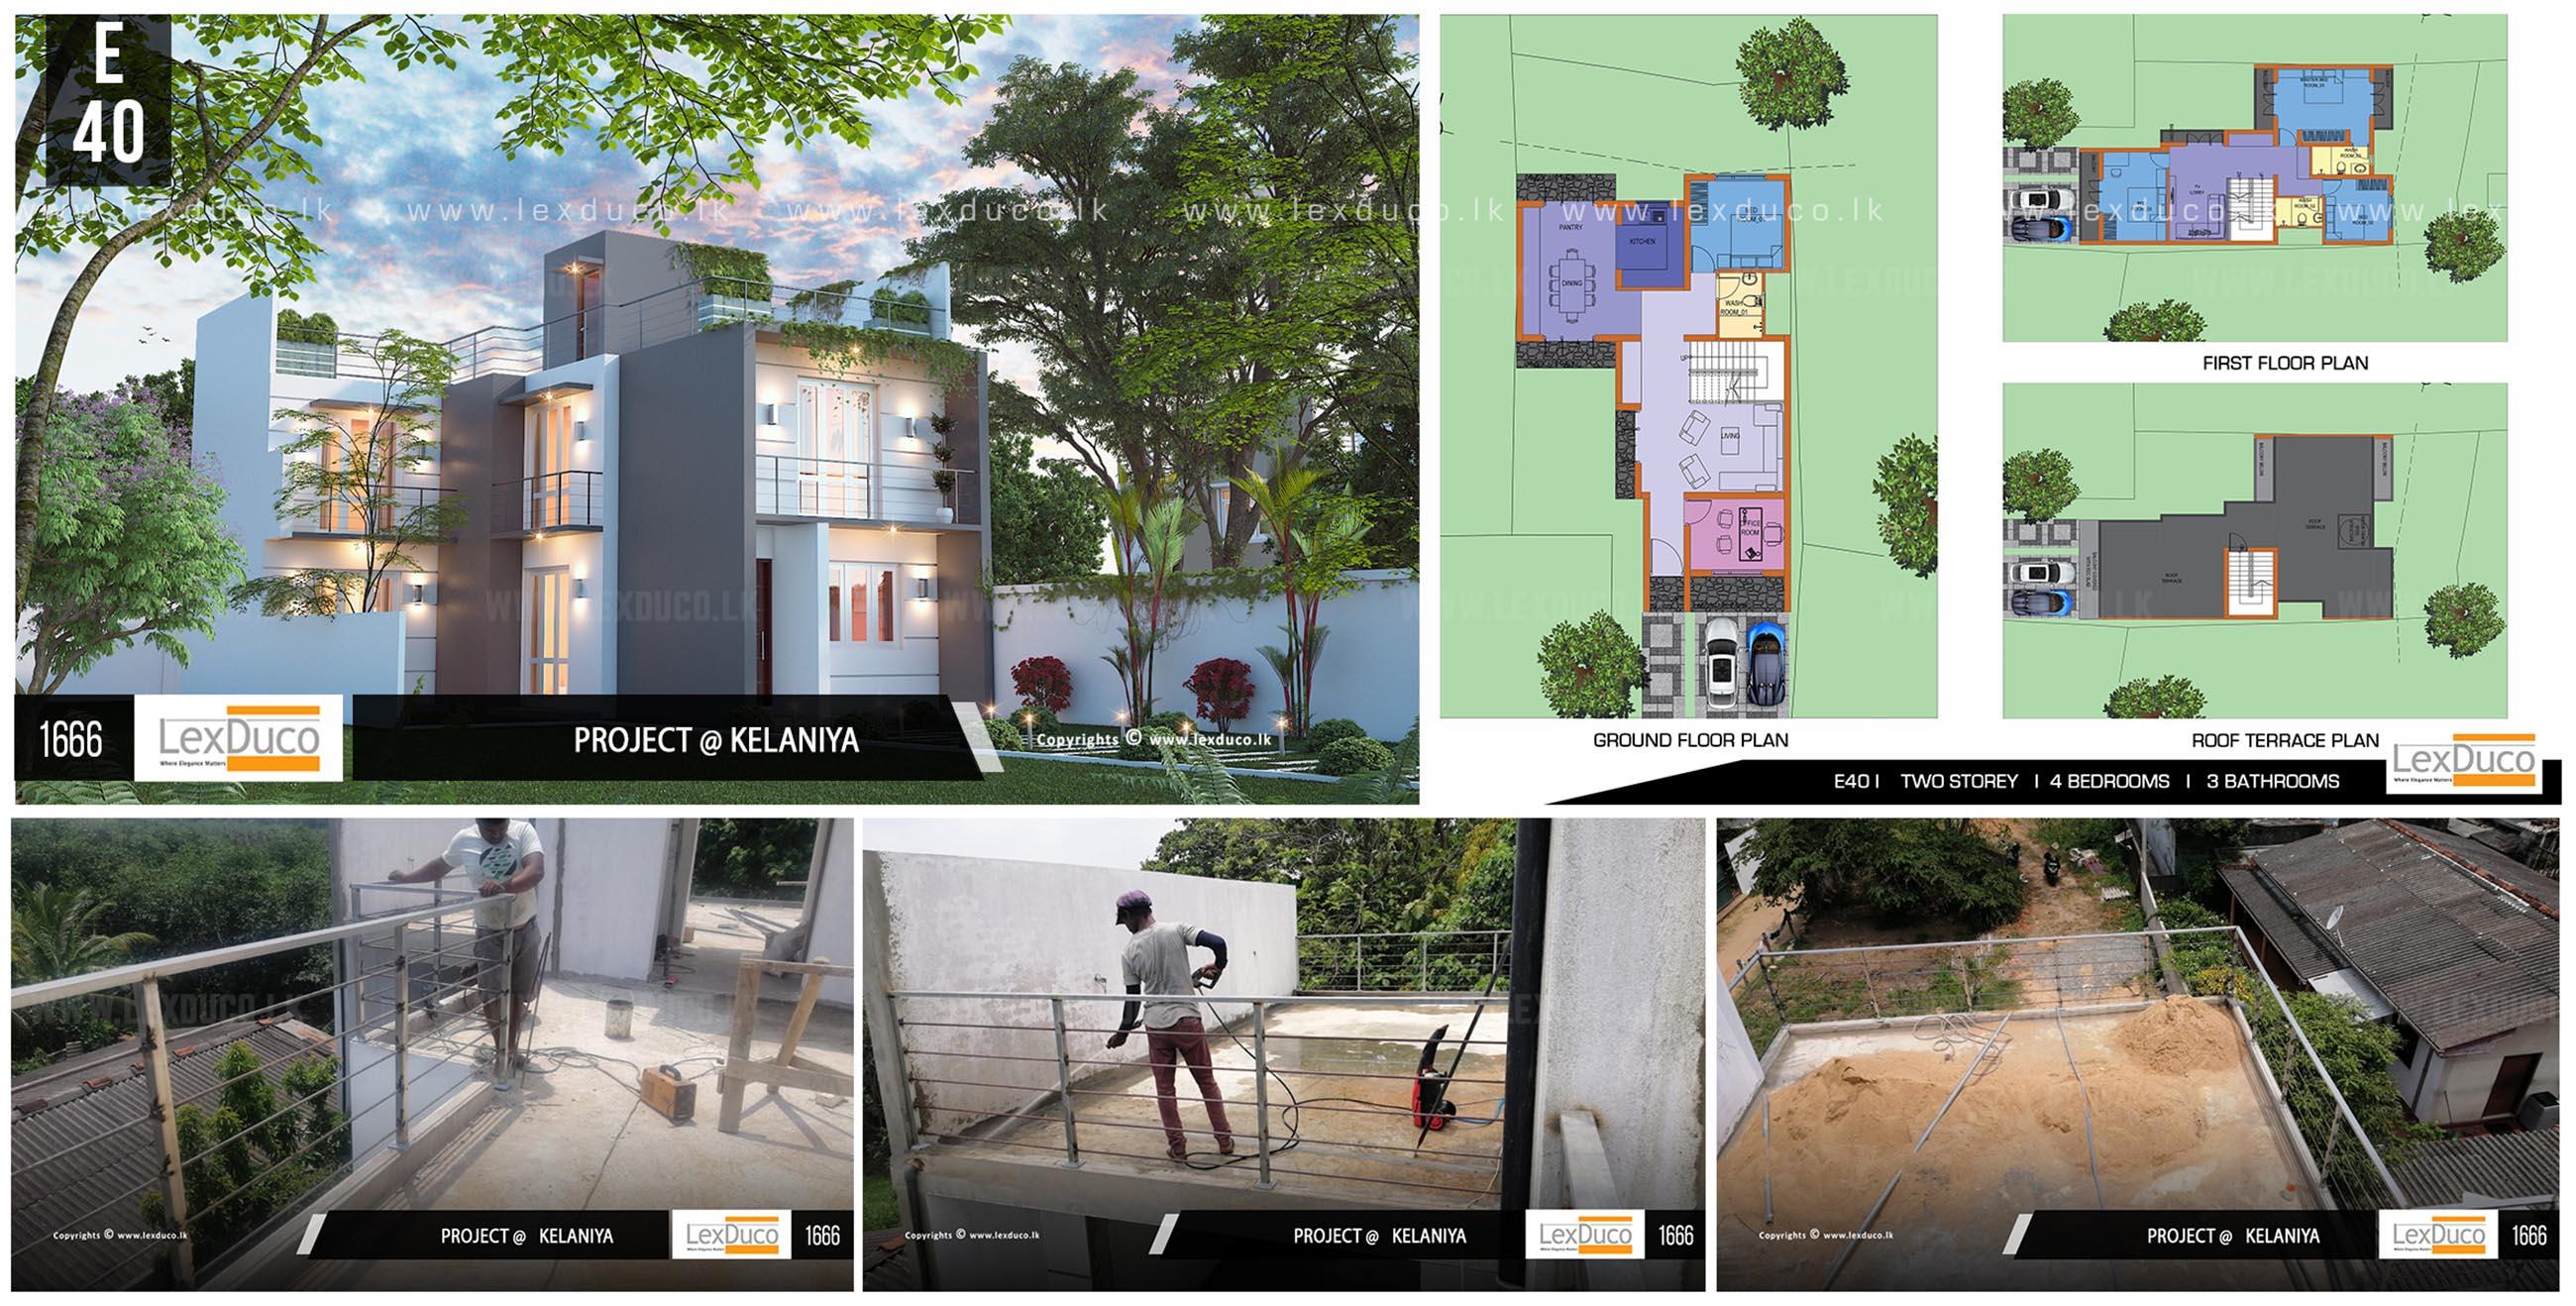 Residential Housing Project at Kelaniya | Lex Duco